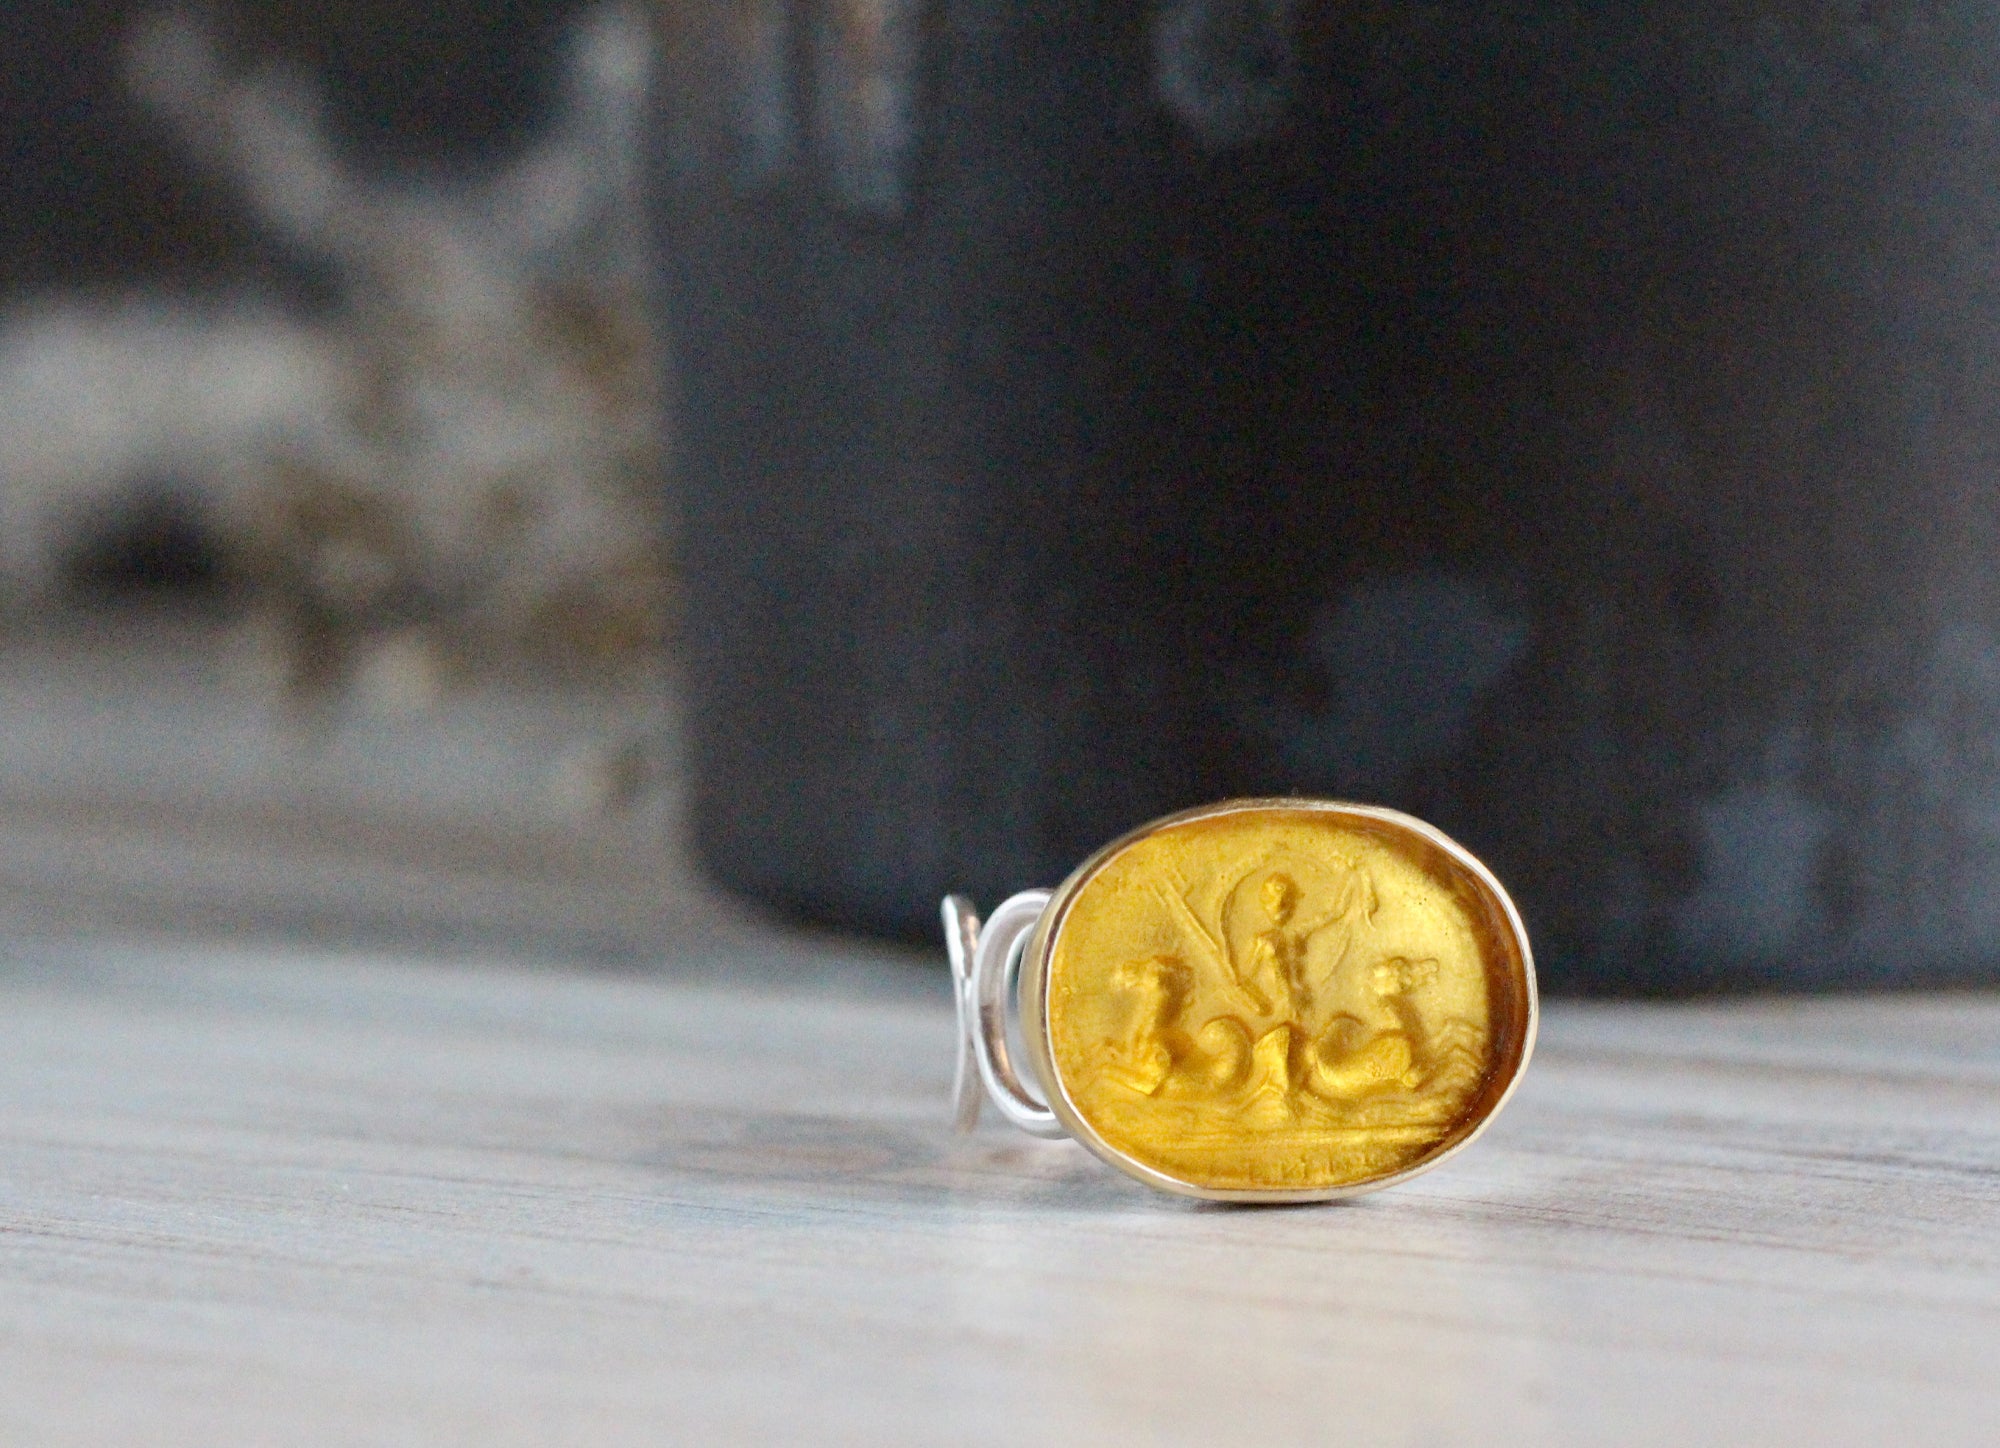 Poseidon Ring in Sterling Silver & 14k Gold